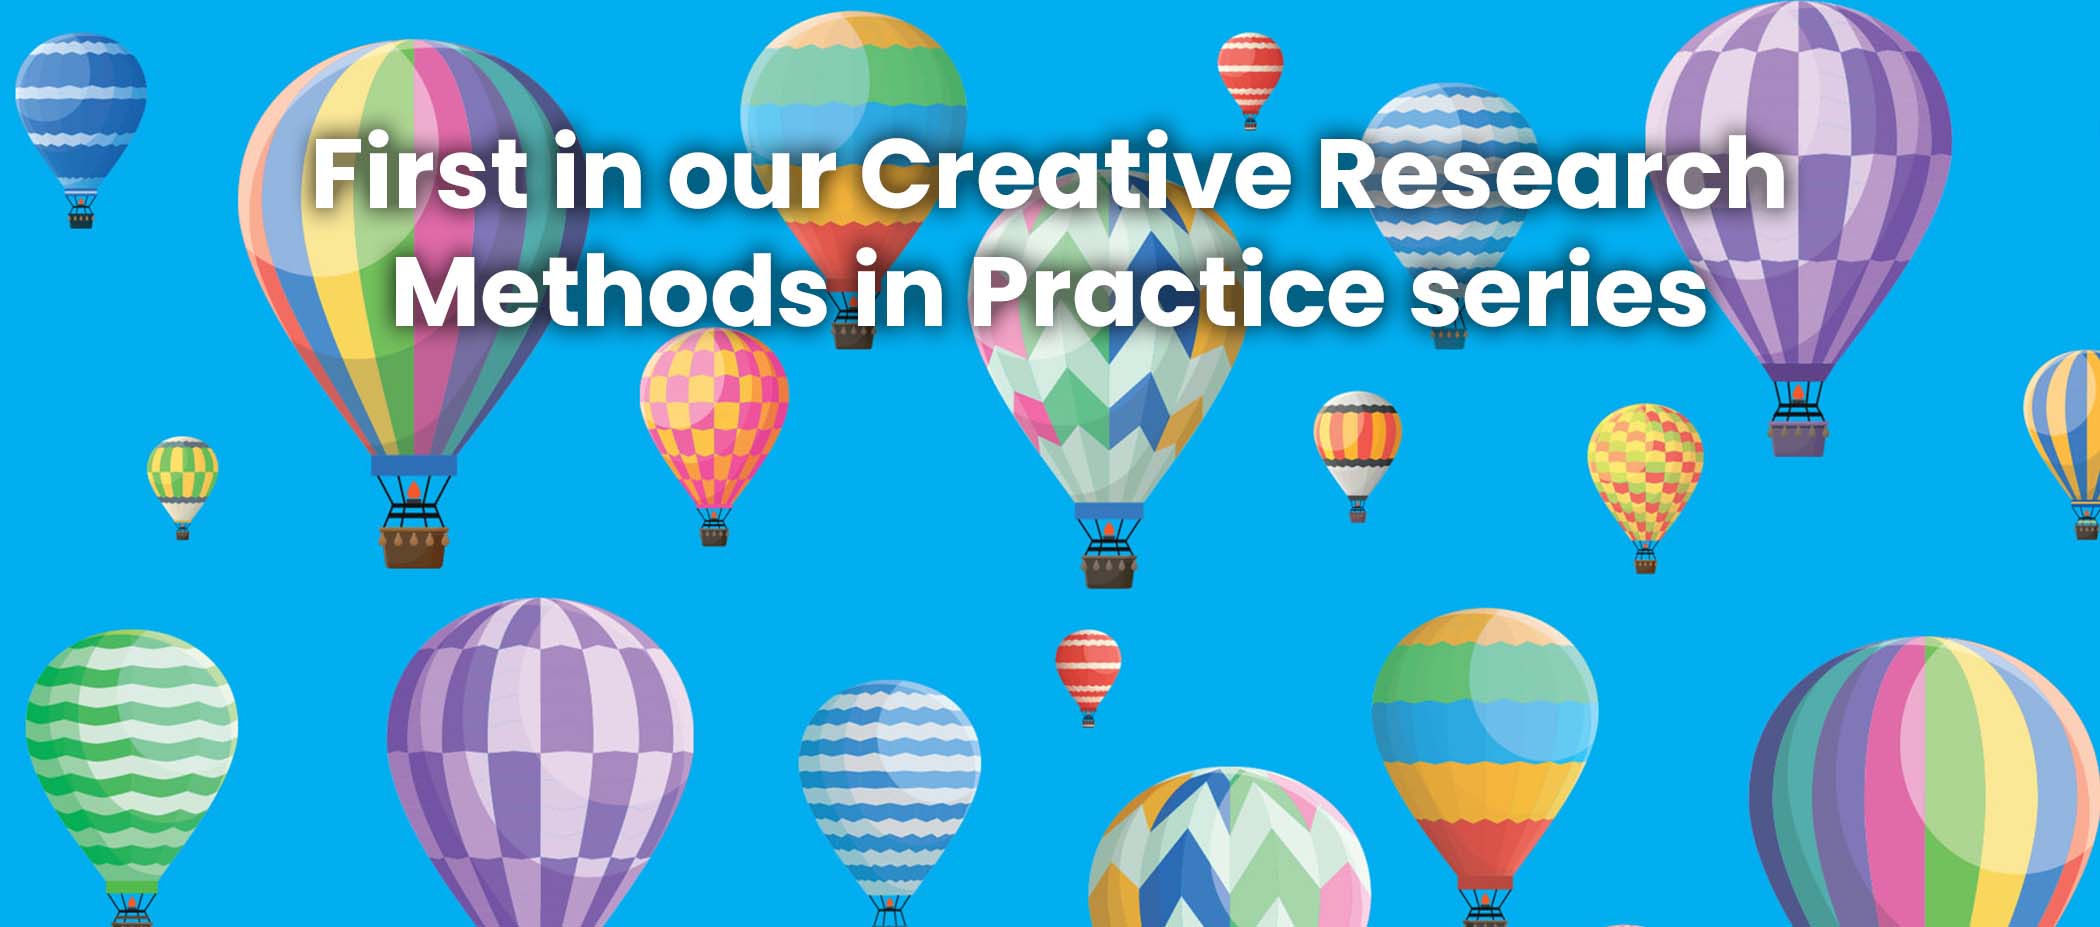 Creative-research-methods-in-practice-series.jpg